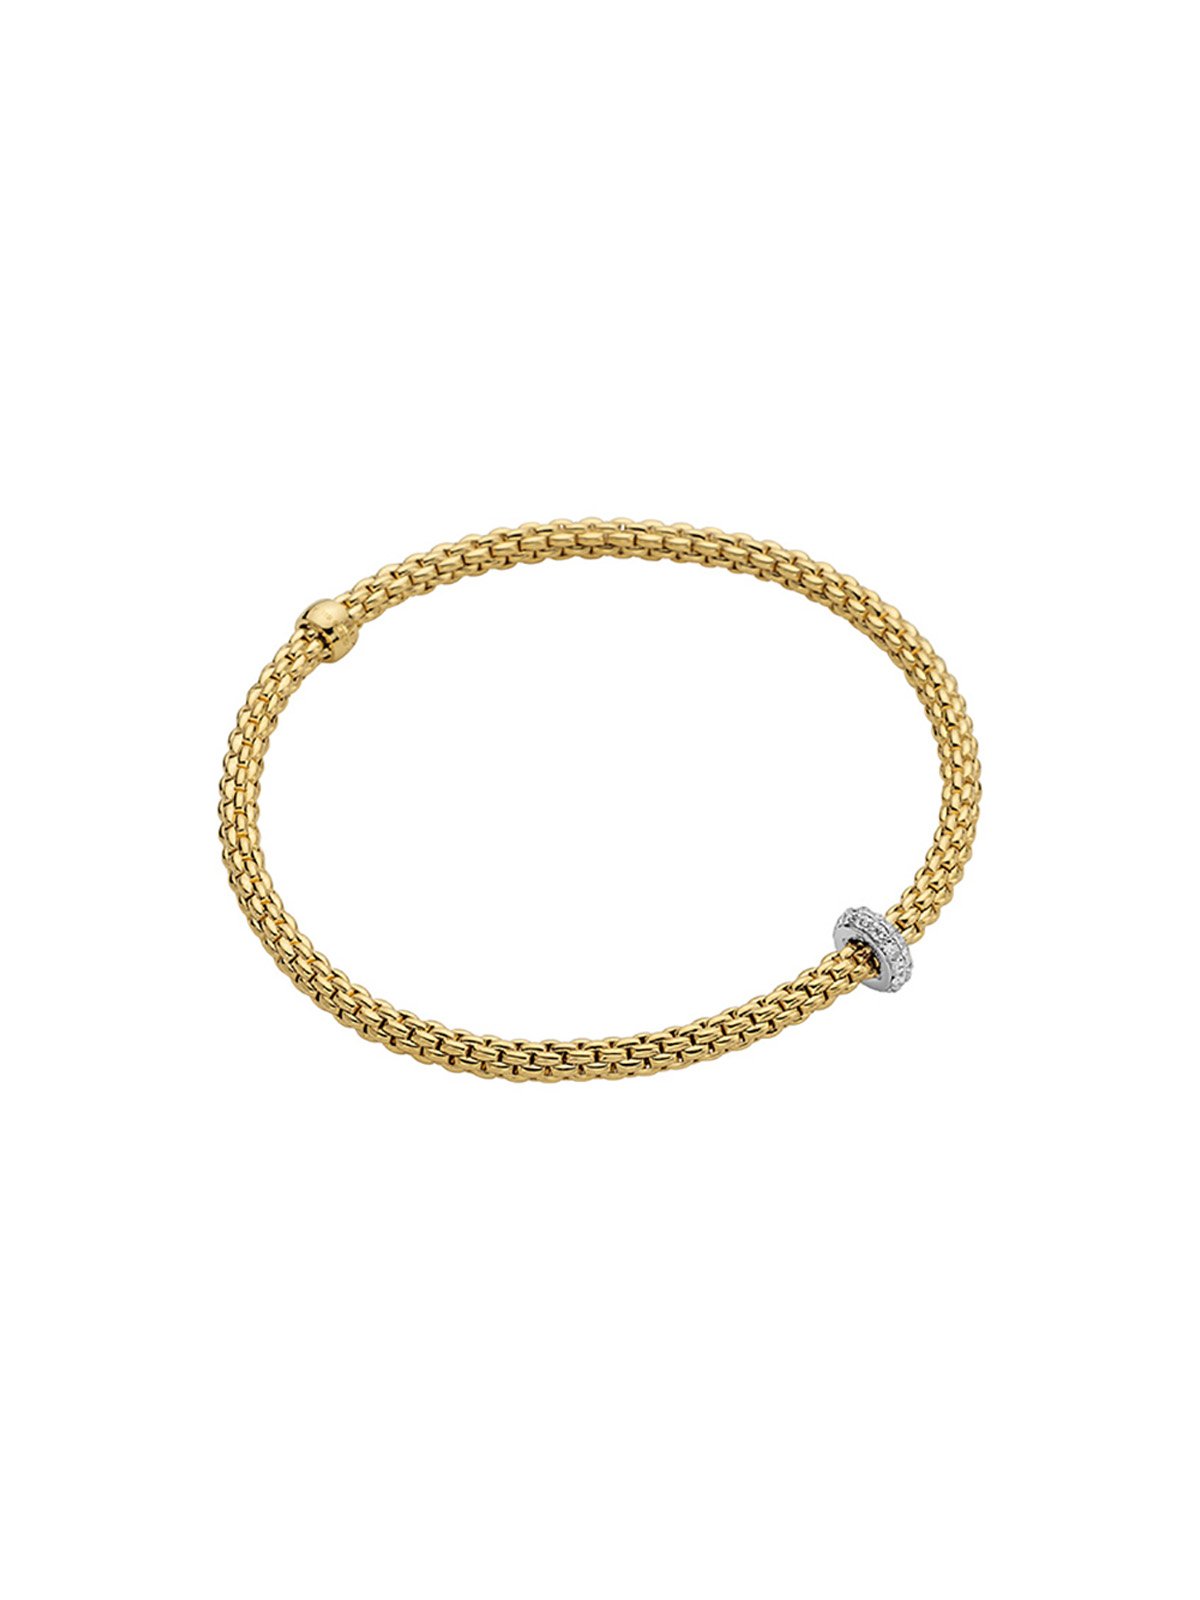 Fope Prima Flex'it Bracelet in 18ct Yellow Gold with Diamonds